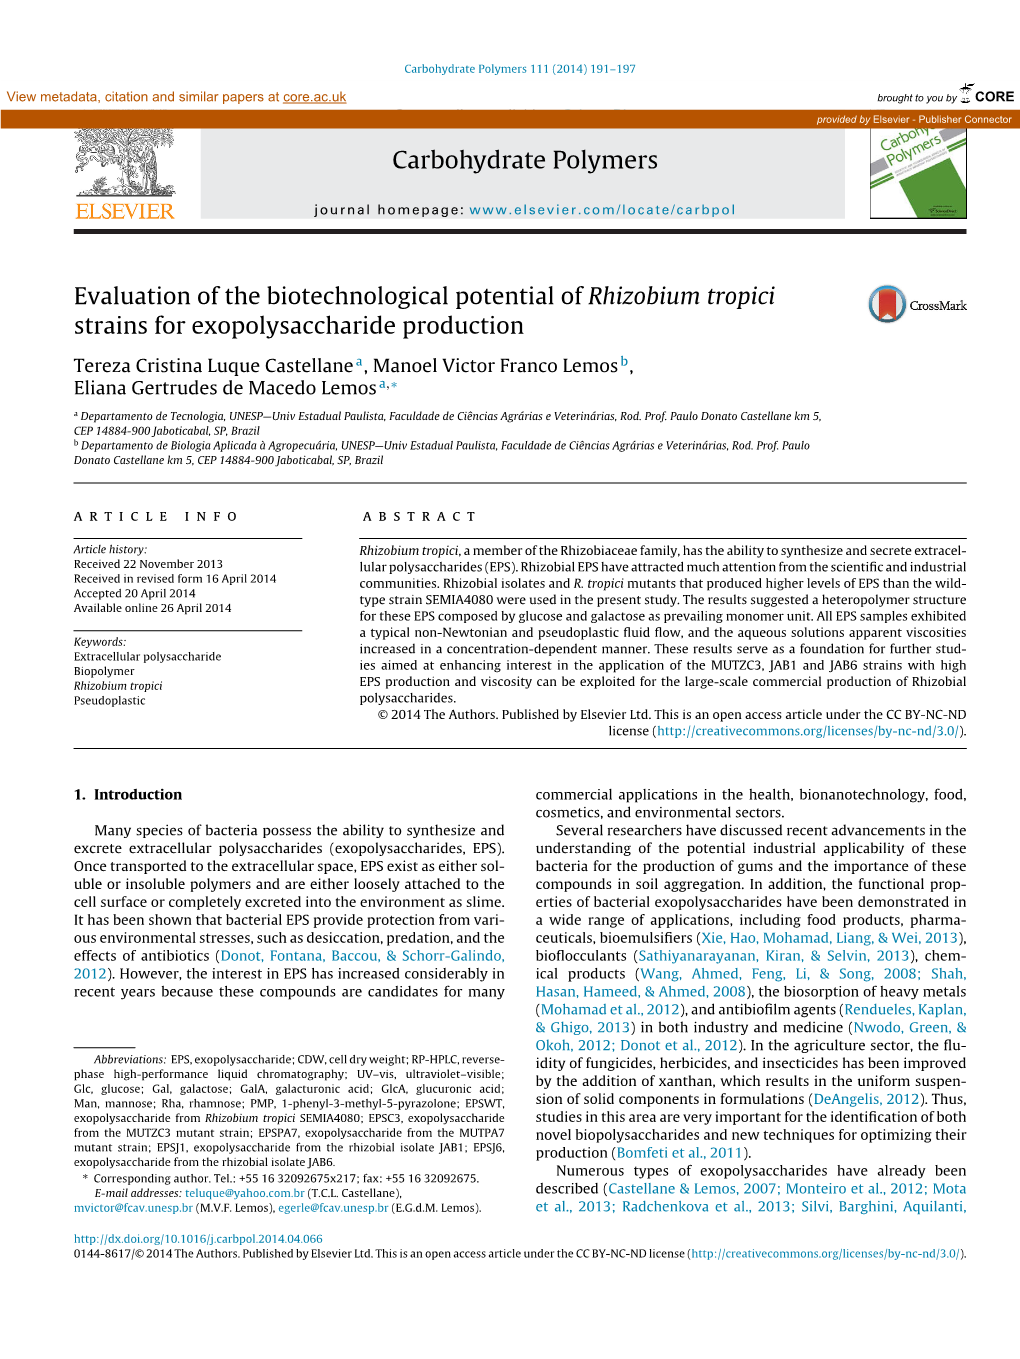 Evaluation of the Biotechnological Potential of Rhizobium Tropici